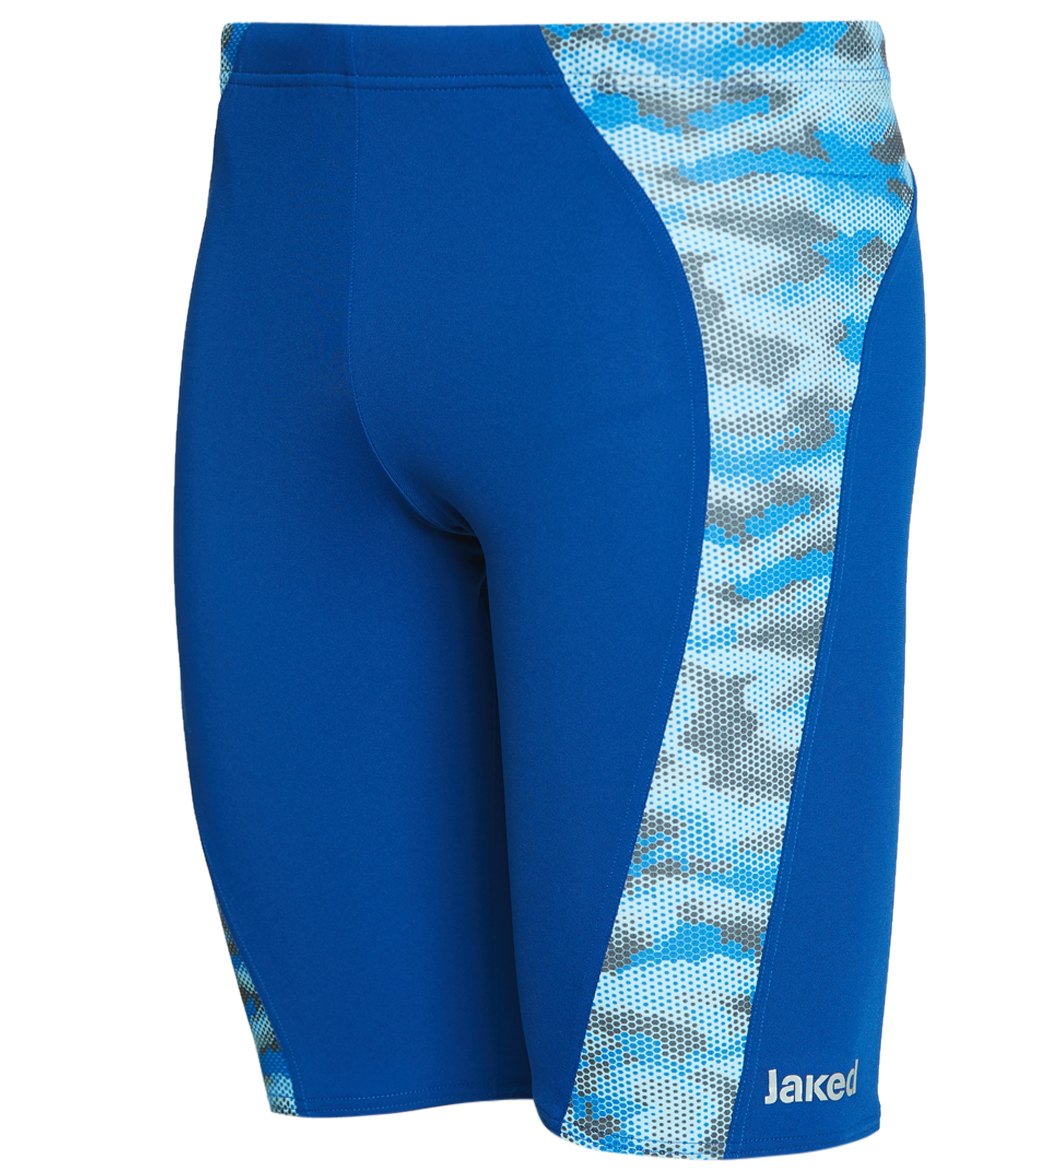 Jaked Men's Pixie Jammer Swimsuit - Blue 26 - Swimoutlet.com